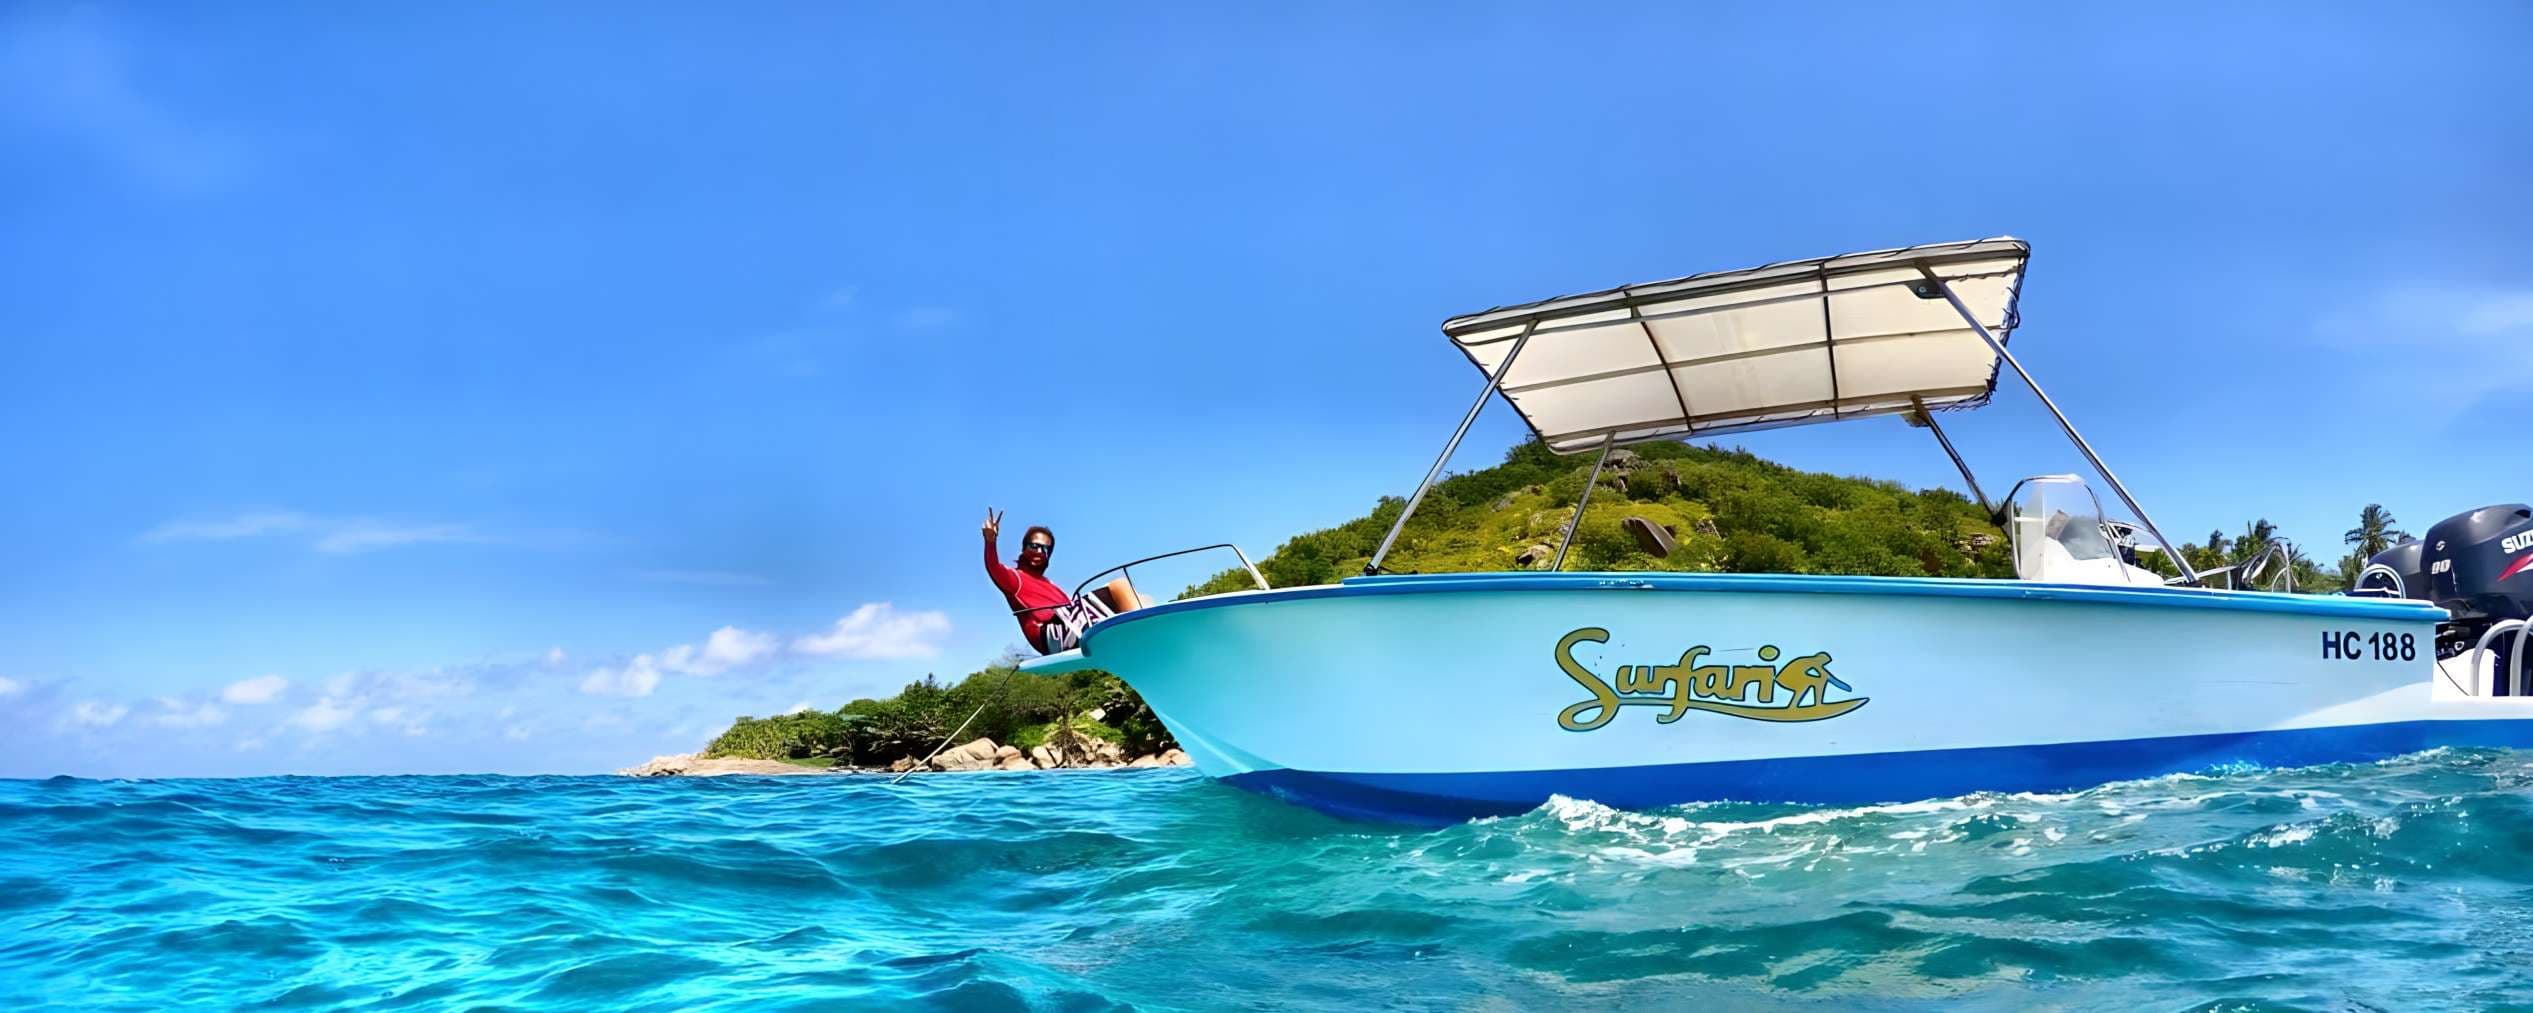 Surfari Seychelles